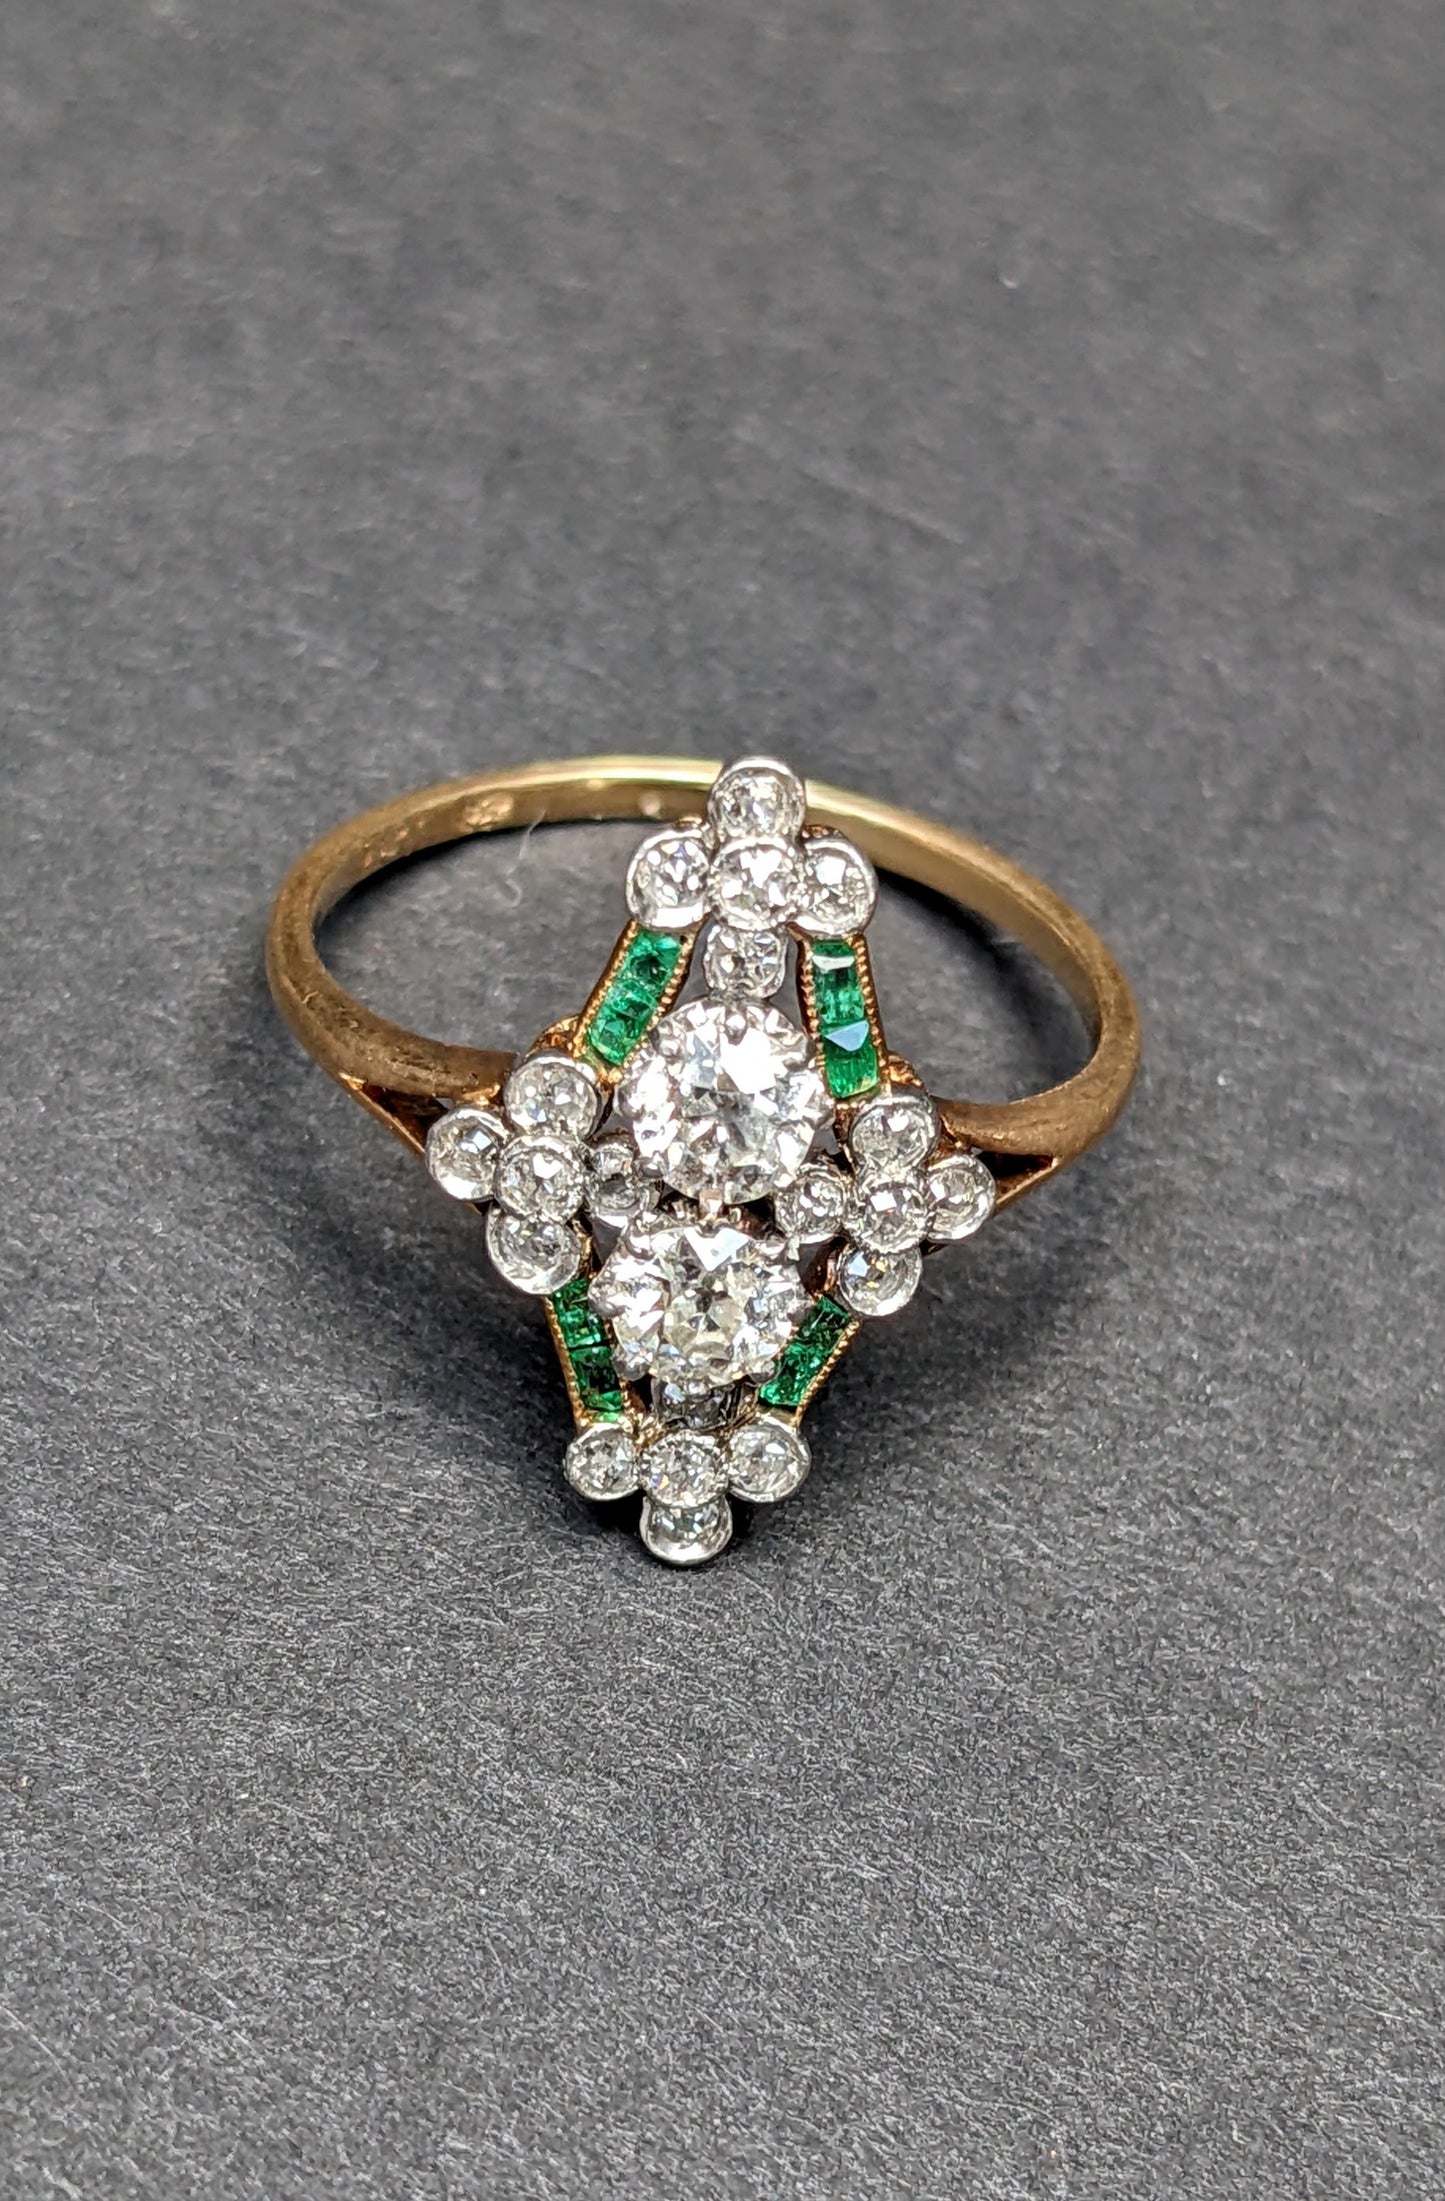 Art Nouveau emerald and diamond ring